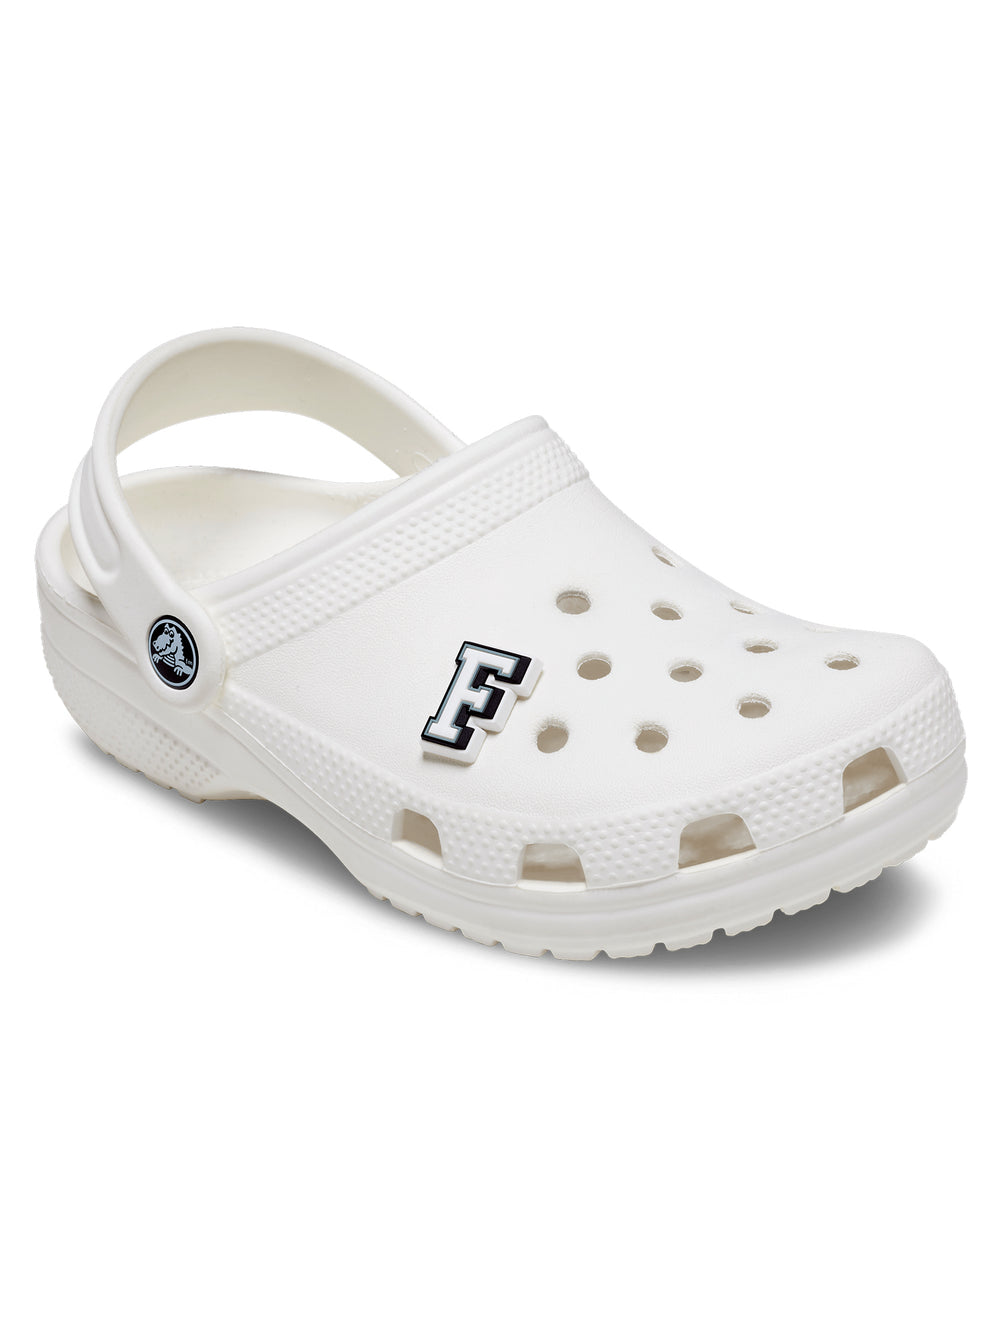 Letter F Jibbitz Shoe Charm - Crocs